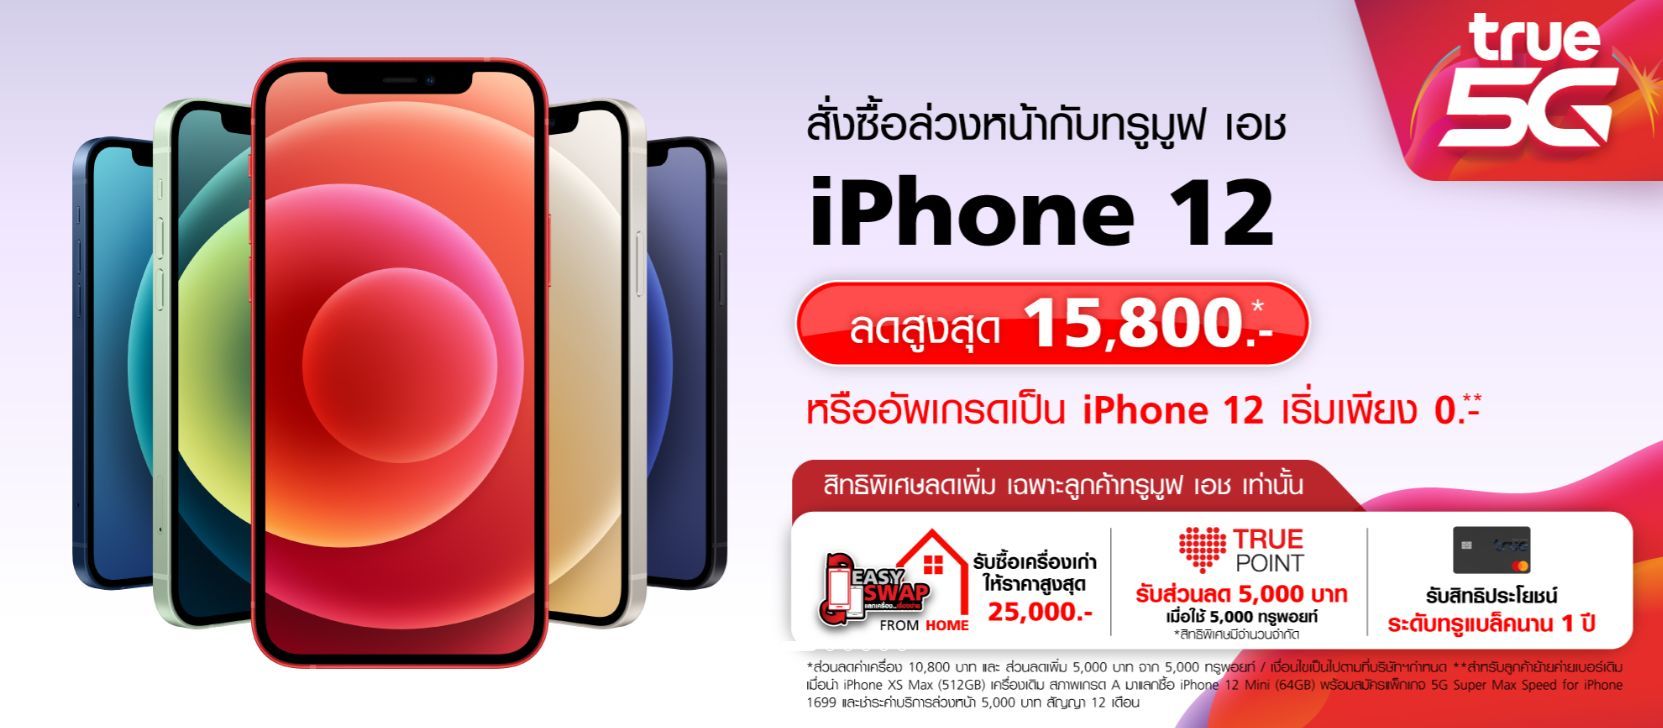 Truemove H เปิดจอง Iphone 12 ทุกรุ่น ลดสูงสุด 15,800 บาท | Thaiger ข่าวไทย